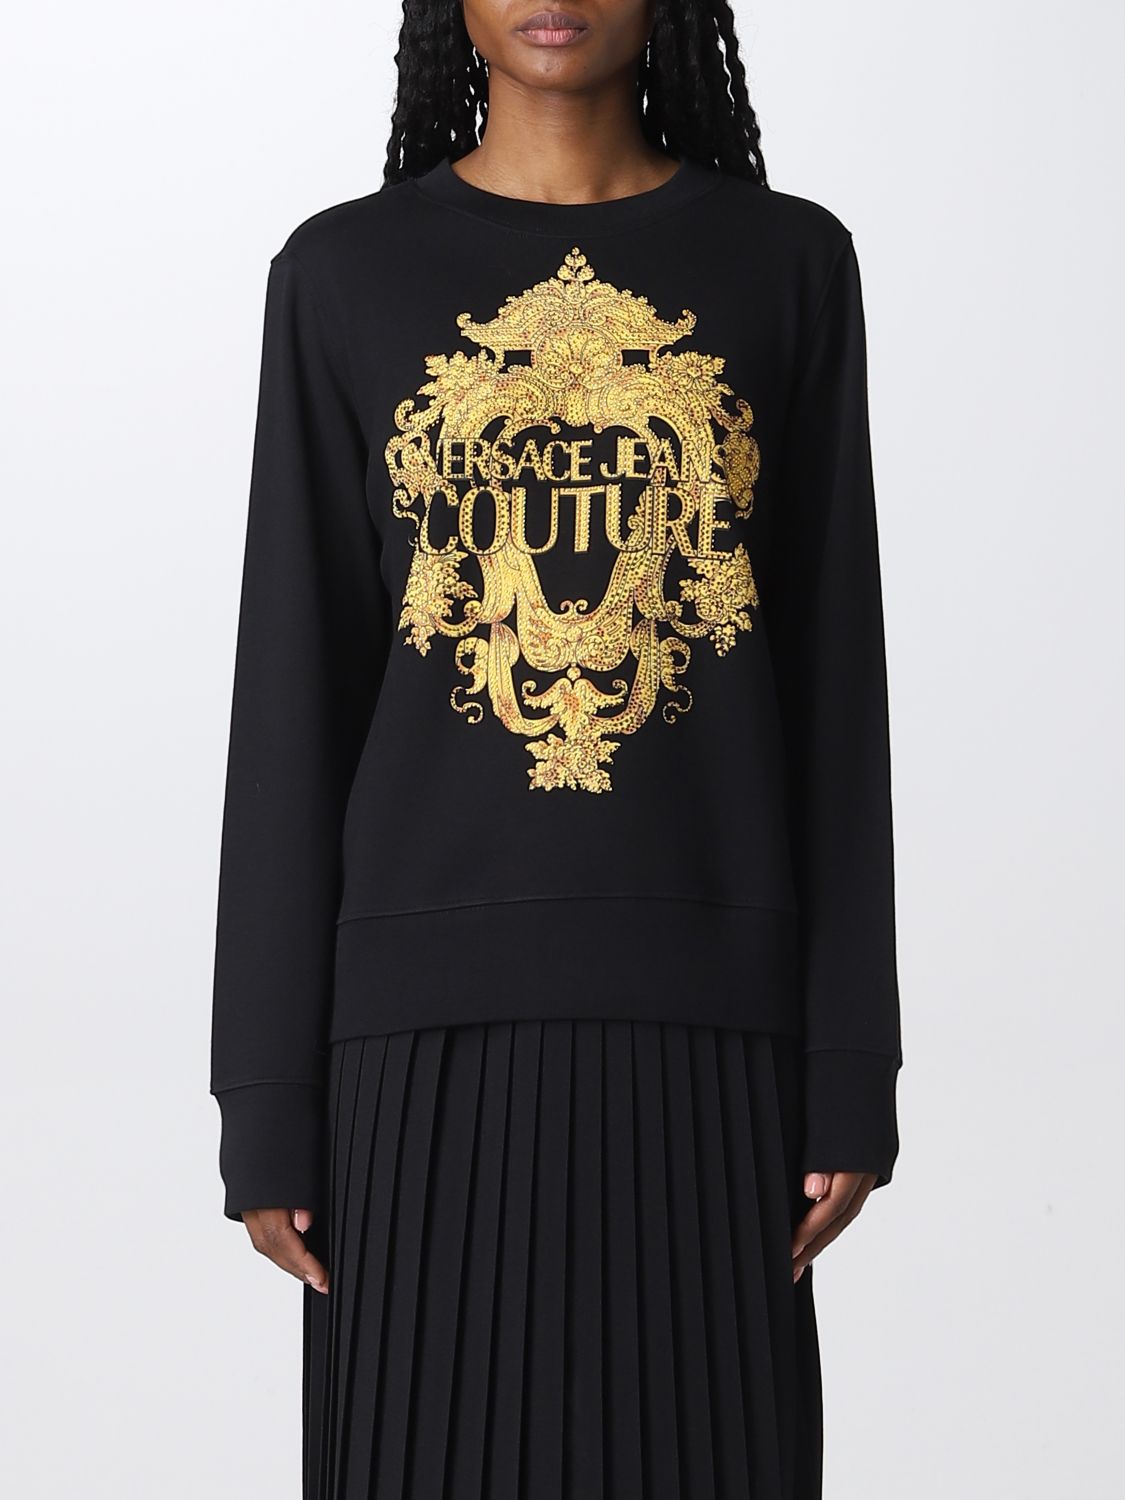 portemonnee Winderig Dwang VERSACE JEANS COUTURE: sweatshirt for woman - Black 1 | Versace Jeans  Couture sweatshirt 73HAIP02CF06P online on GIGLIO.COM